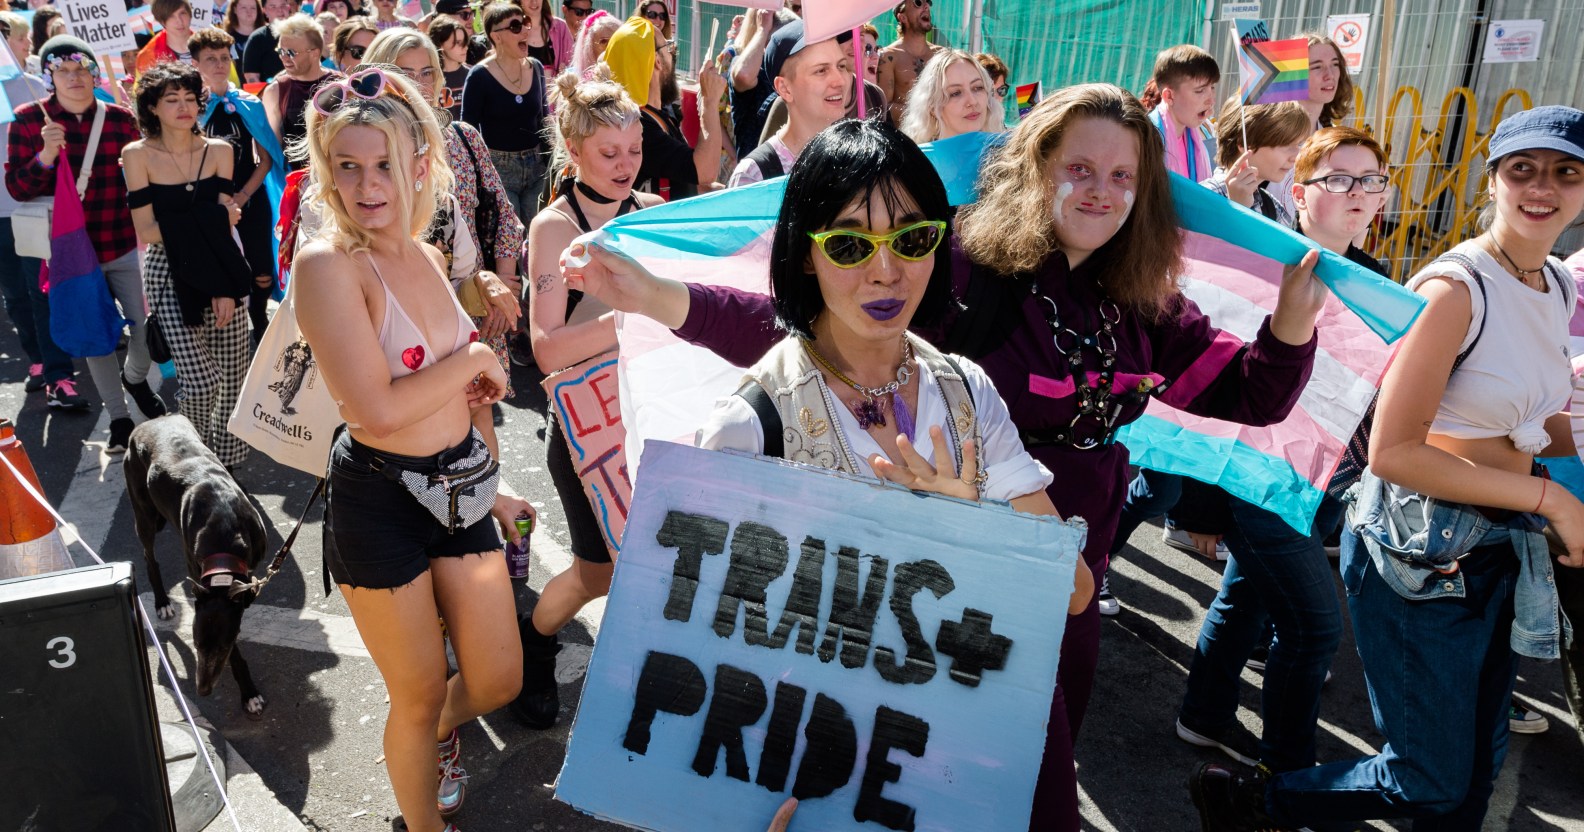 London Trans Pride announces June protest: 'We march for trans life'